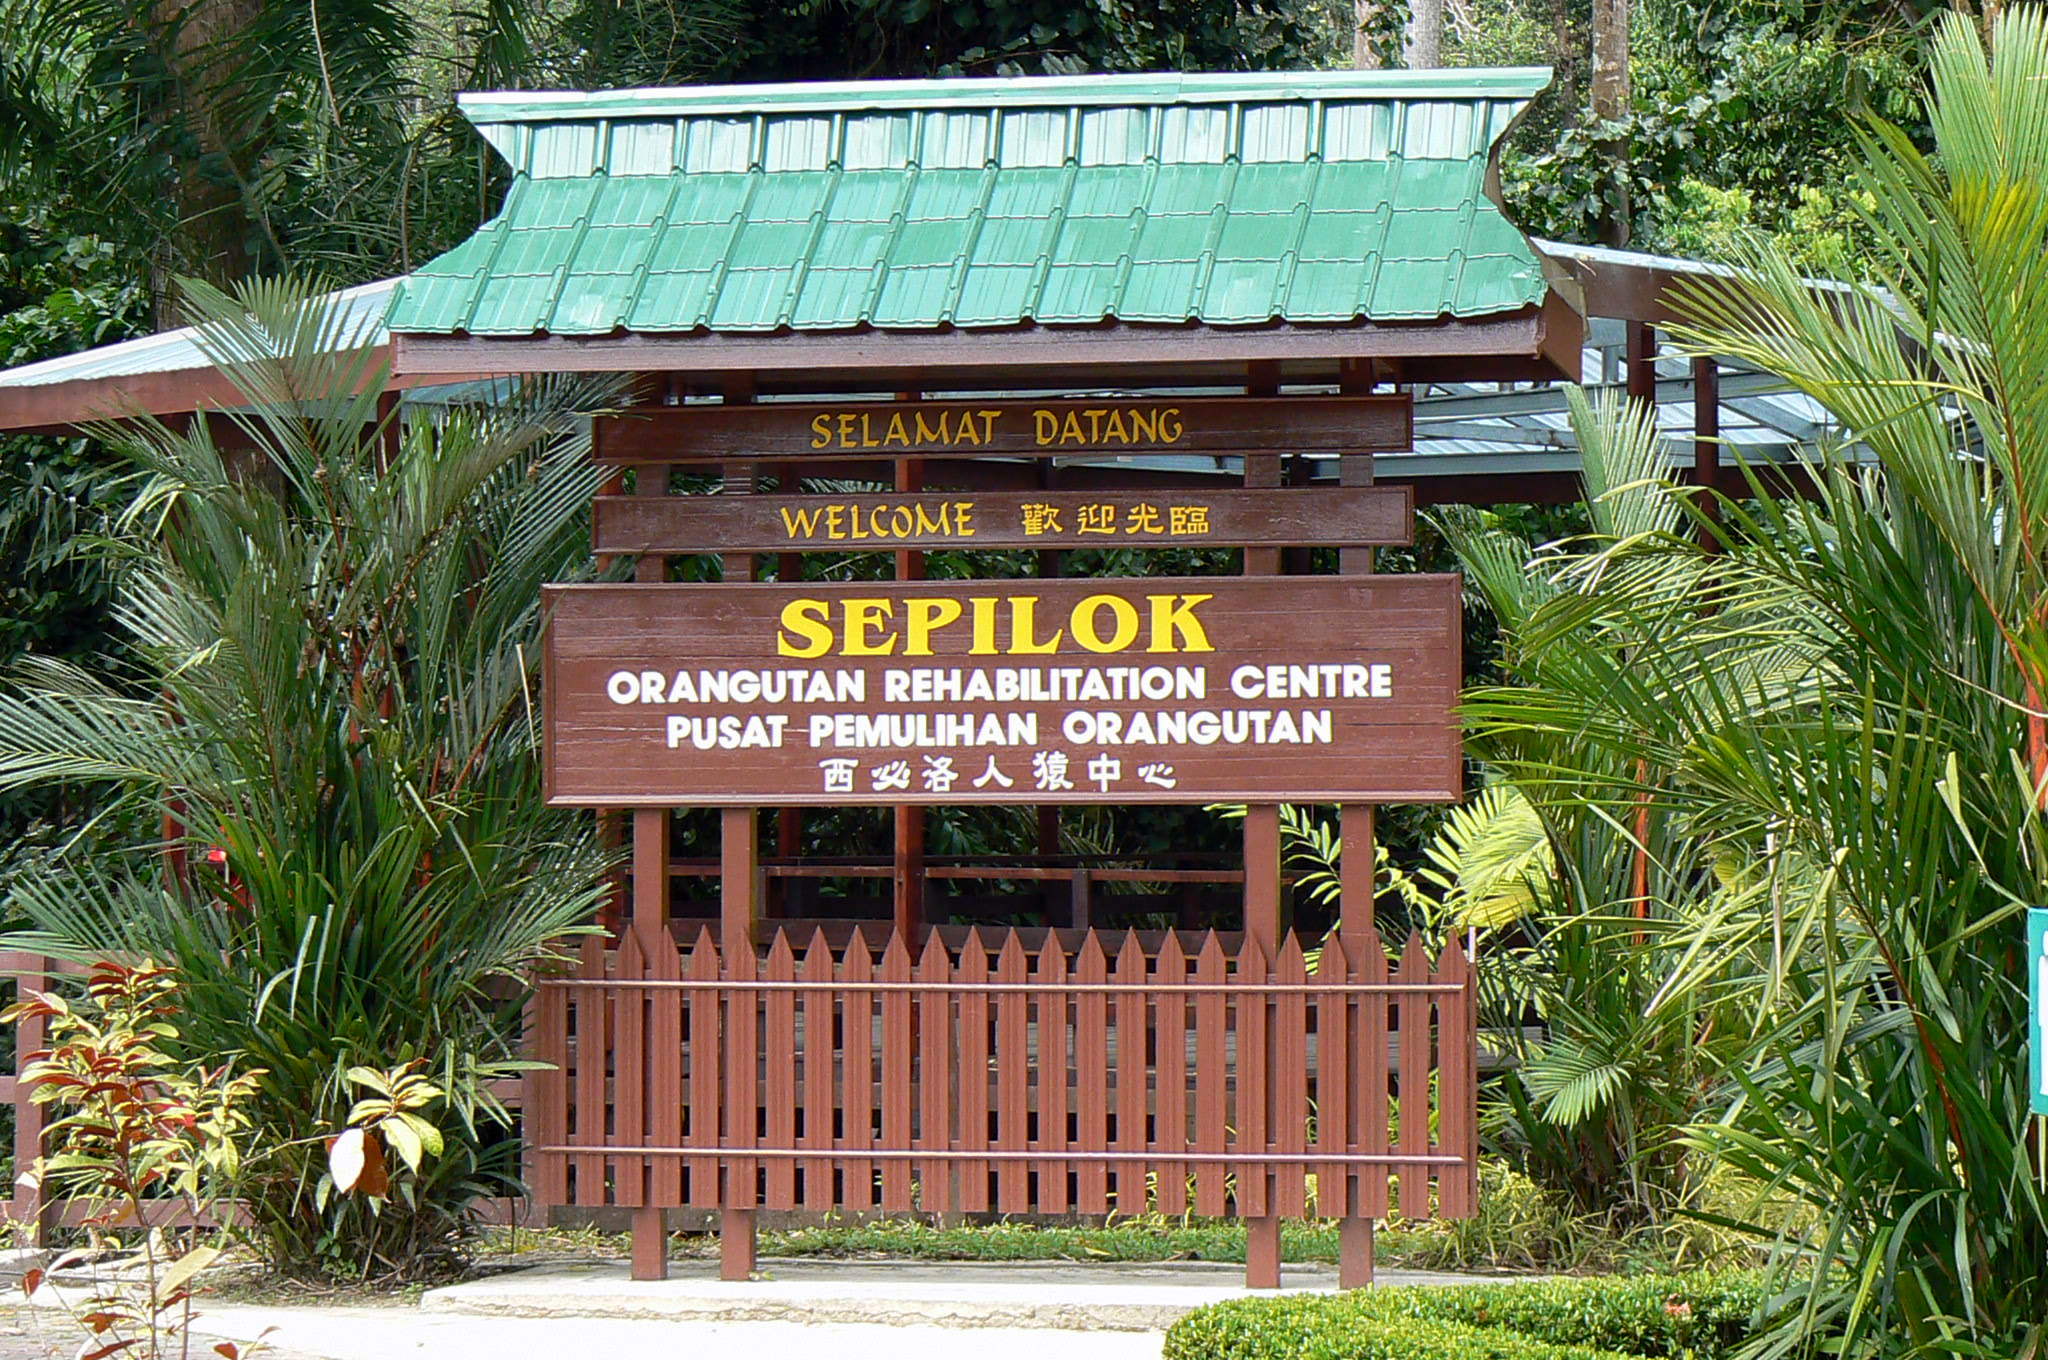 Sepilok Organutan Rehabilitation Centre, Borneo